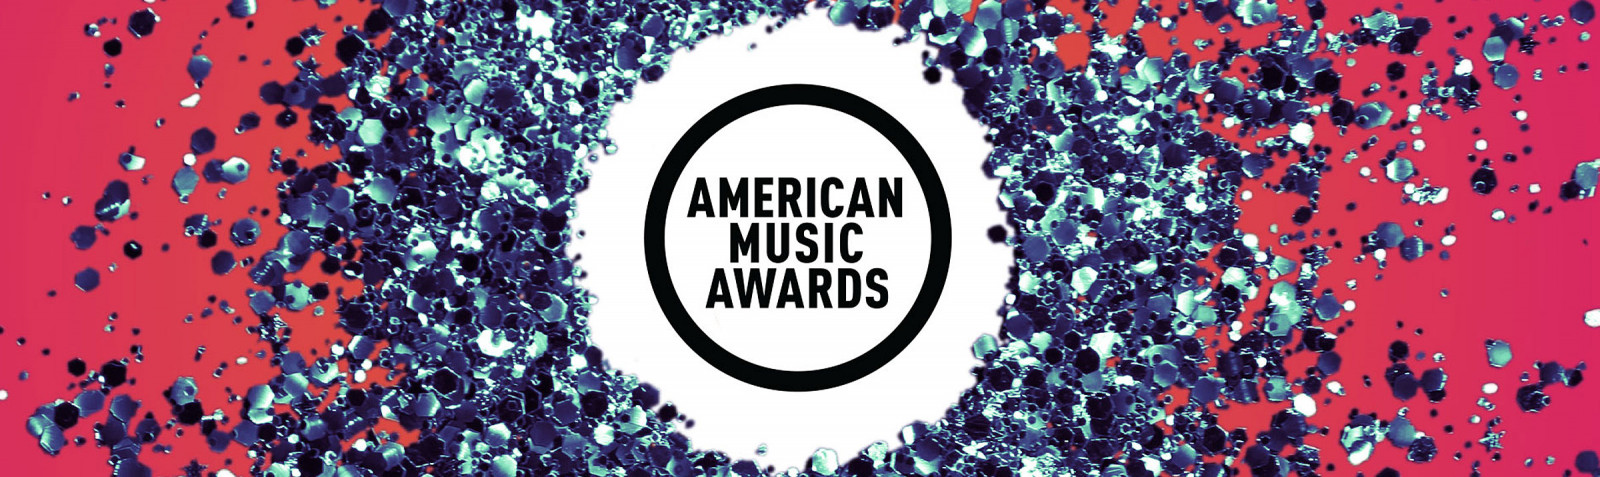 american-music-awards